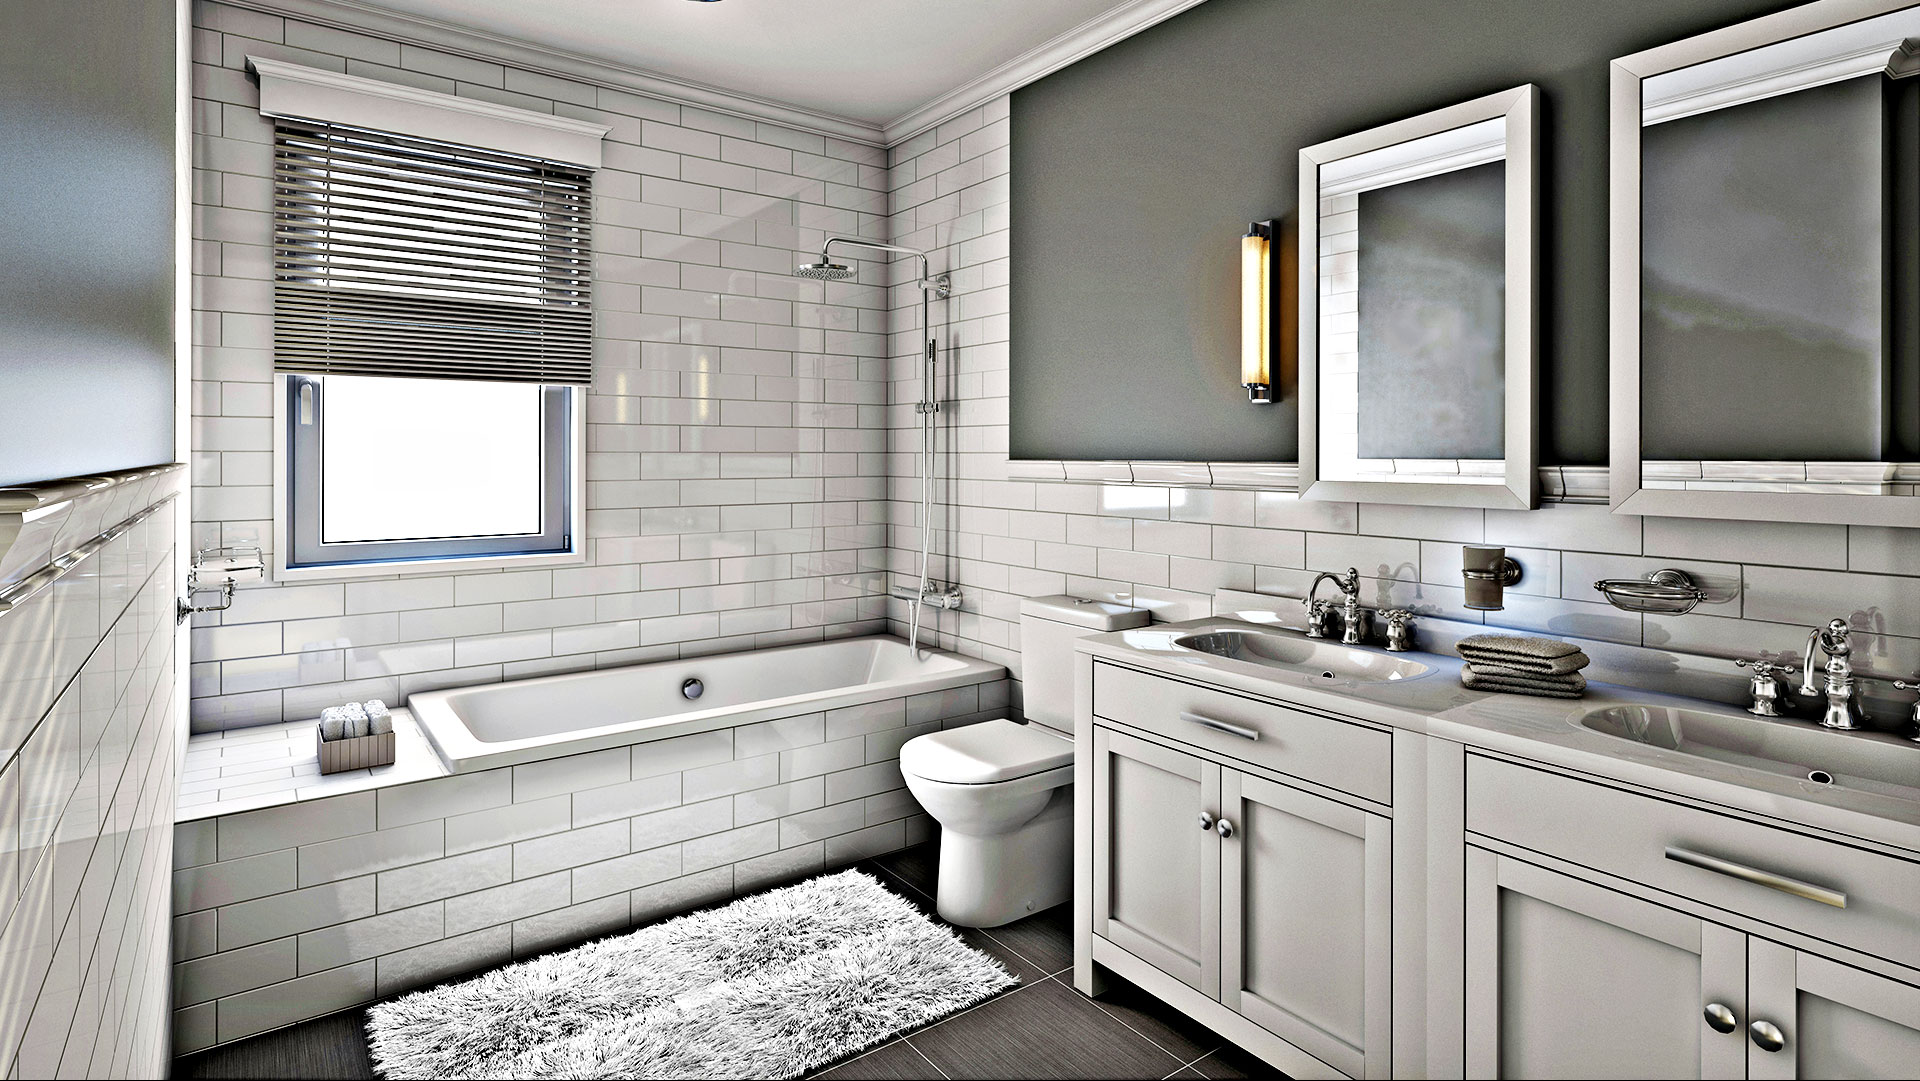 Jeff Bobb Home Improvements, LLC Remodeled Bathroom